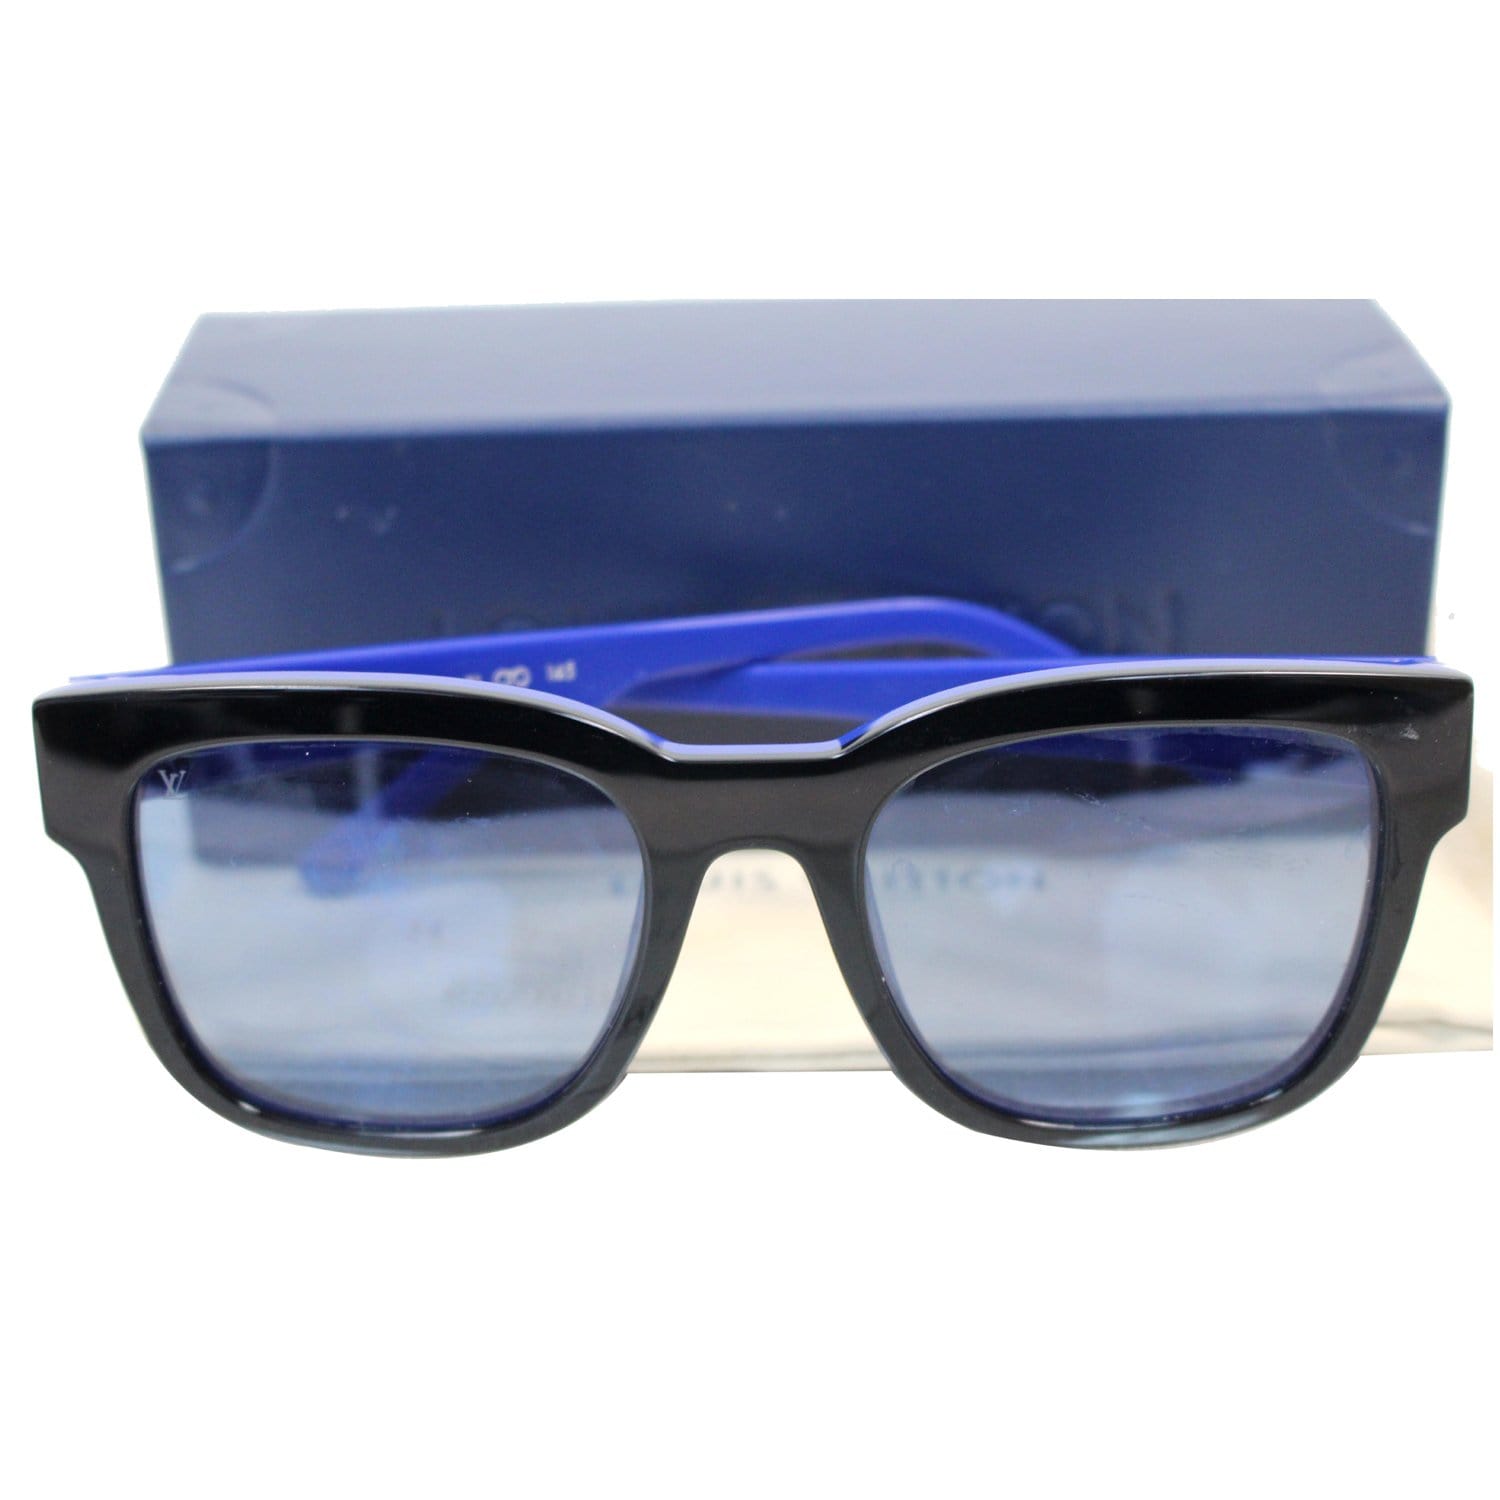 Louis Vuitton Men's Sunglasses Z1597E Black Frame/Clear Lens used LV